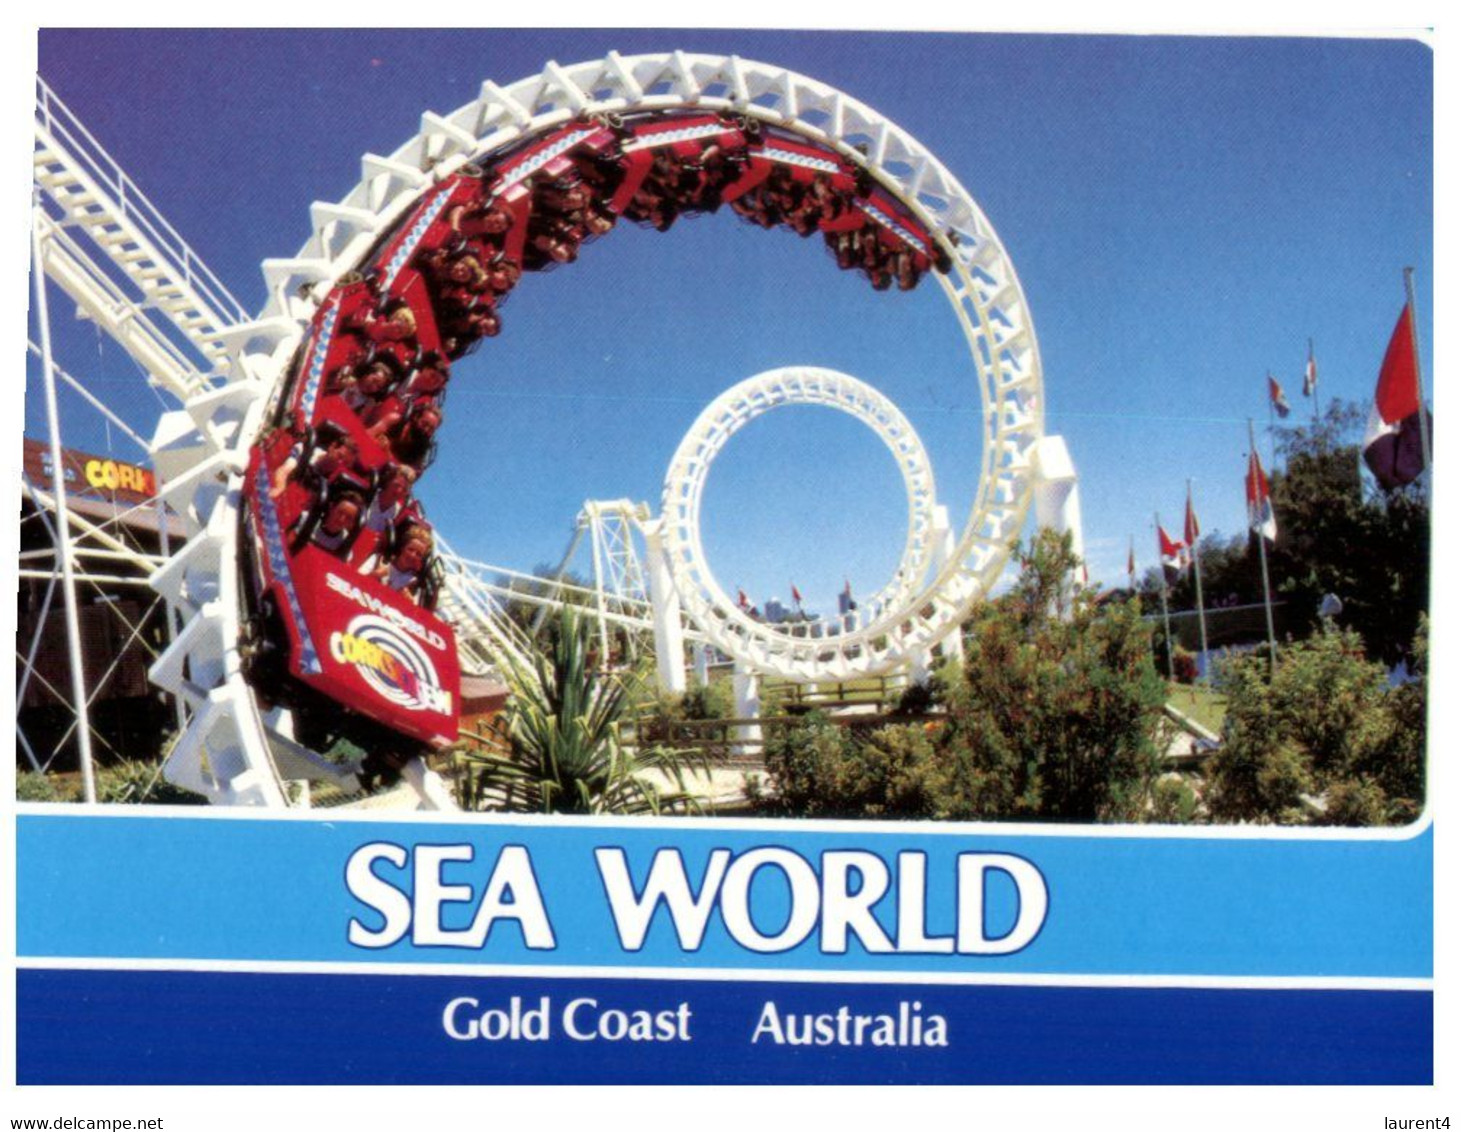 (V 25) Australia - QLD - Sea World - Cockscrew Ride - Gold Coast